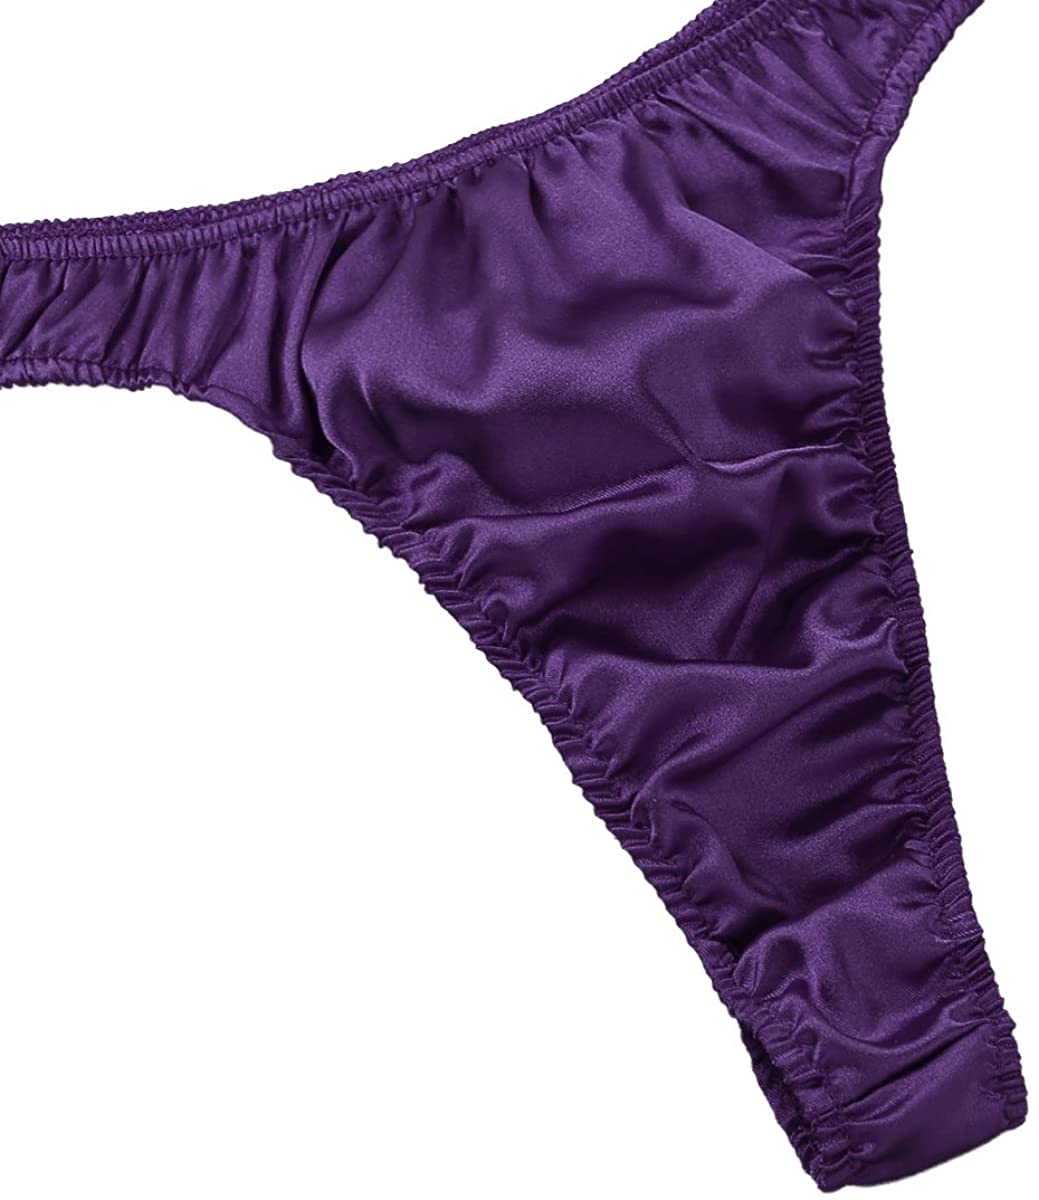 Alvivi Men S Satin Ruffled Casual Pouch G String Thong Panties